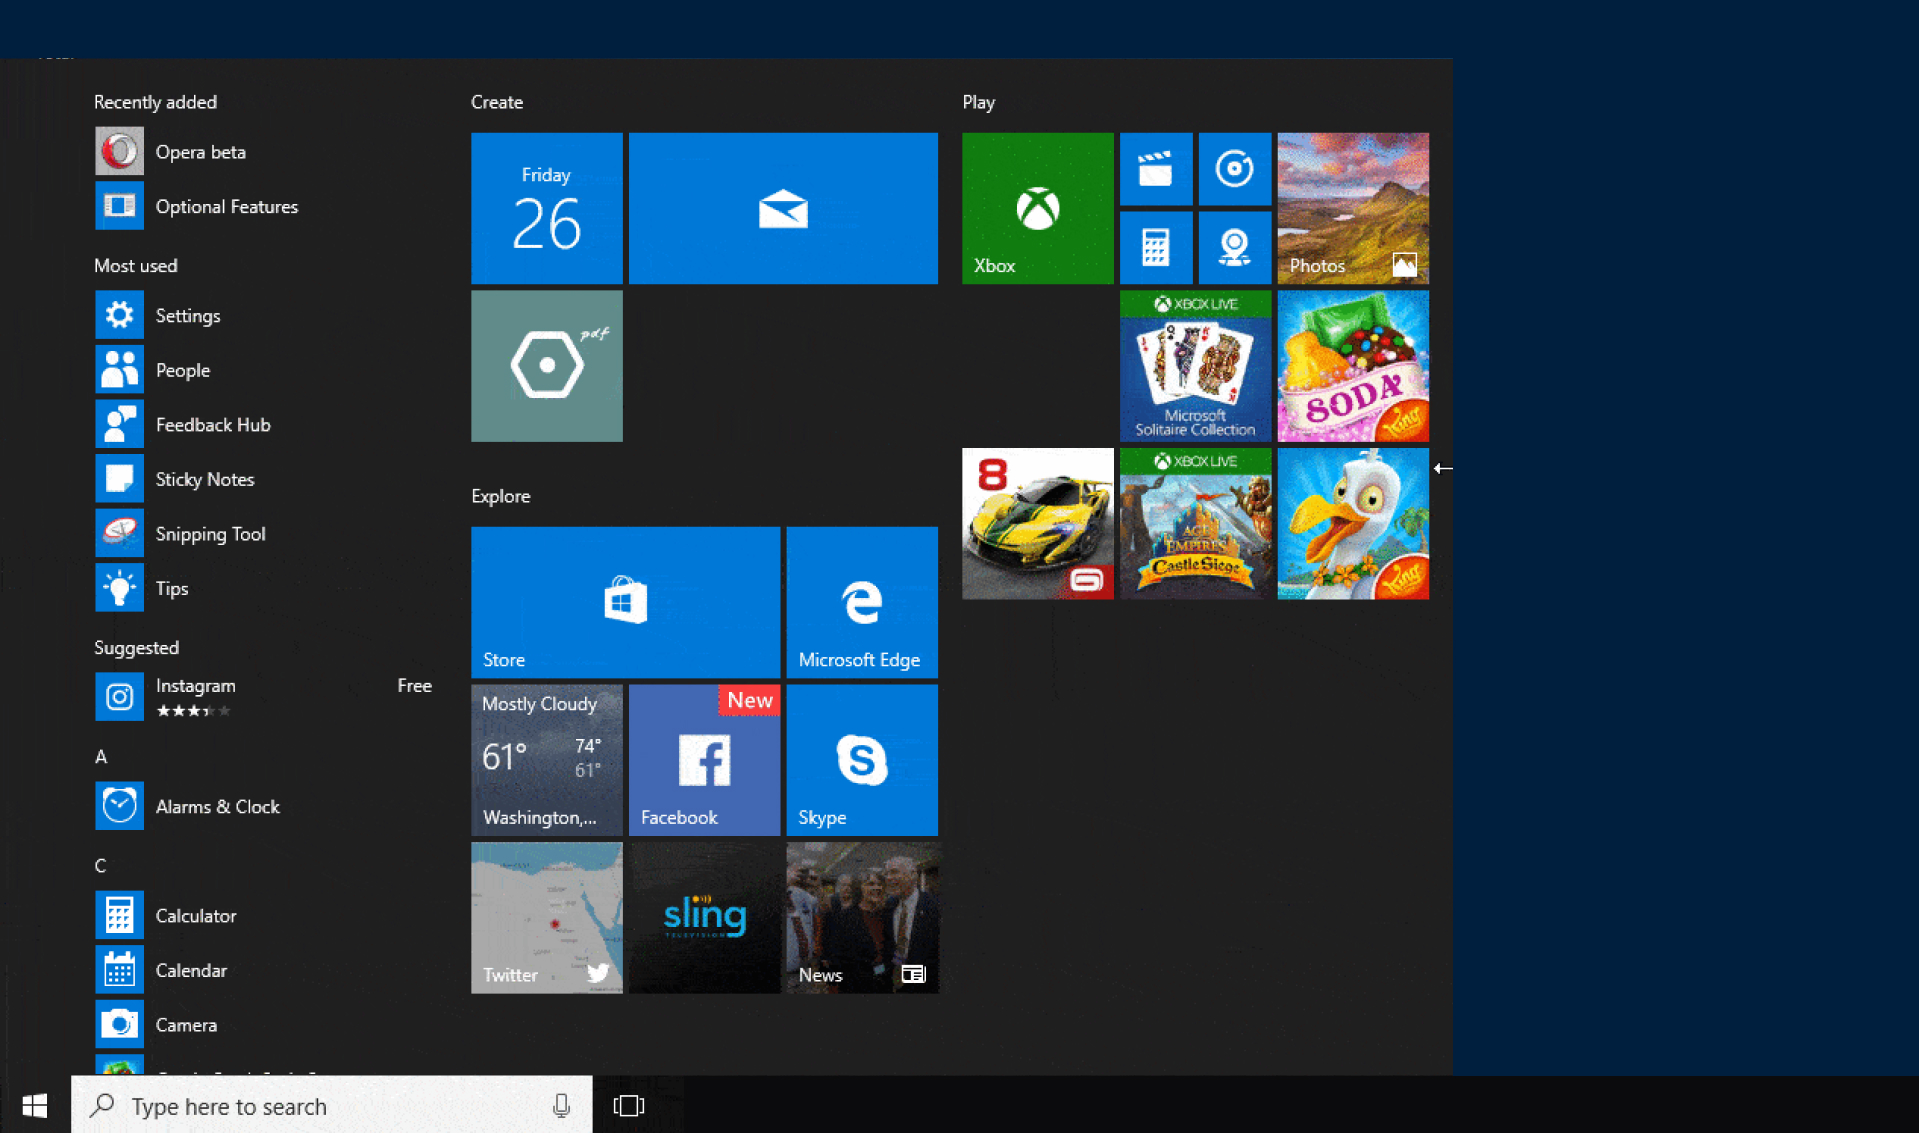 Windows 10 Photos app icon